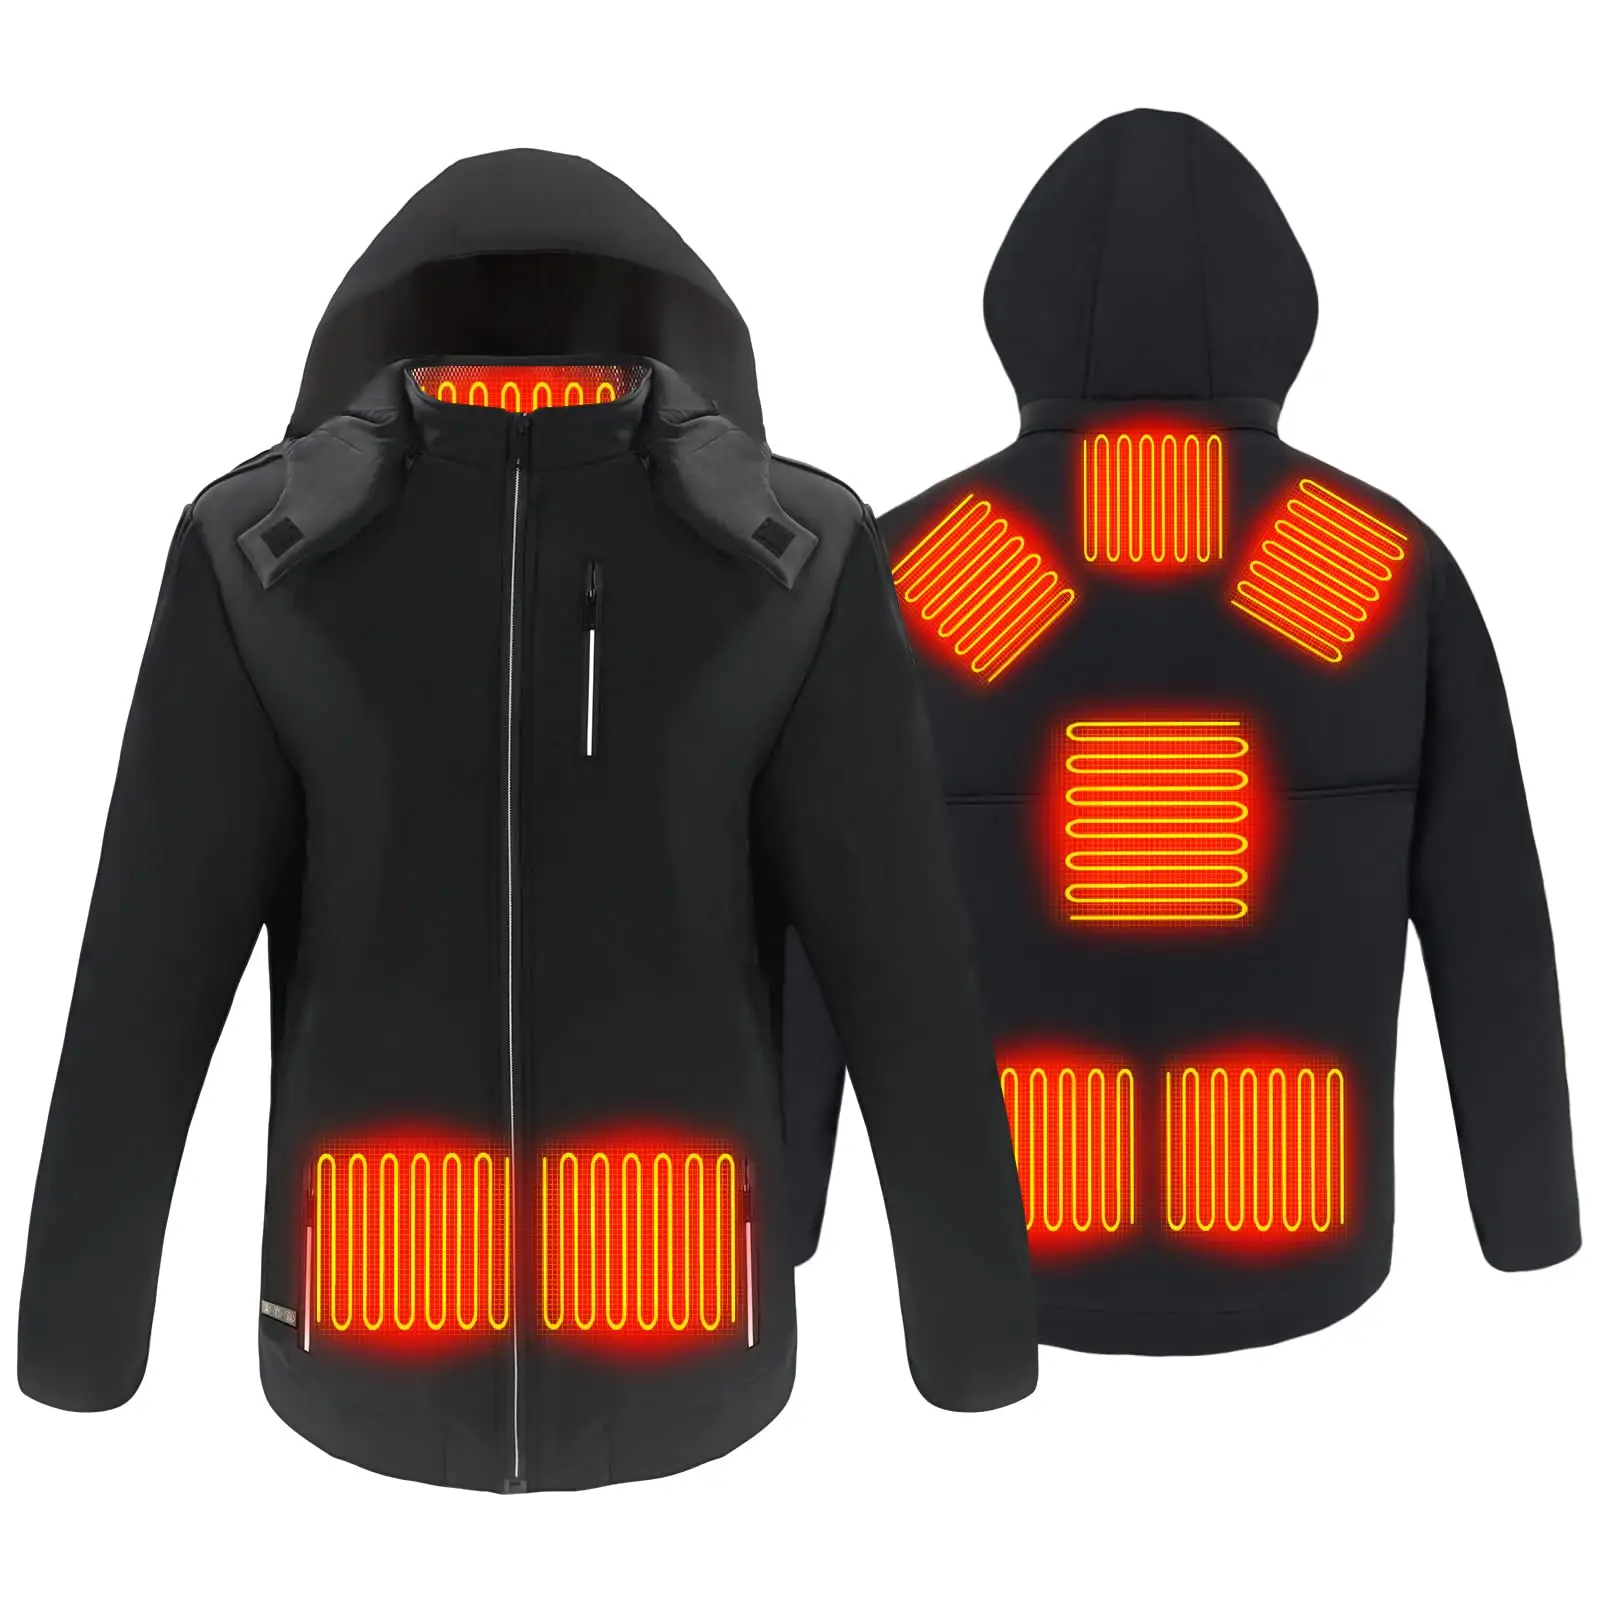 Rechargeable Smart Electric Outerwear Heated Vest Jacket Heating Body Warm Hooded Coat for Men Women